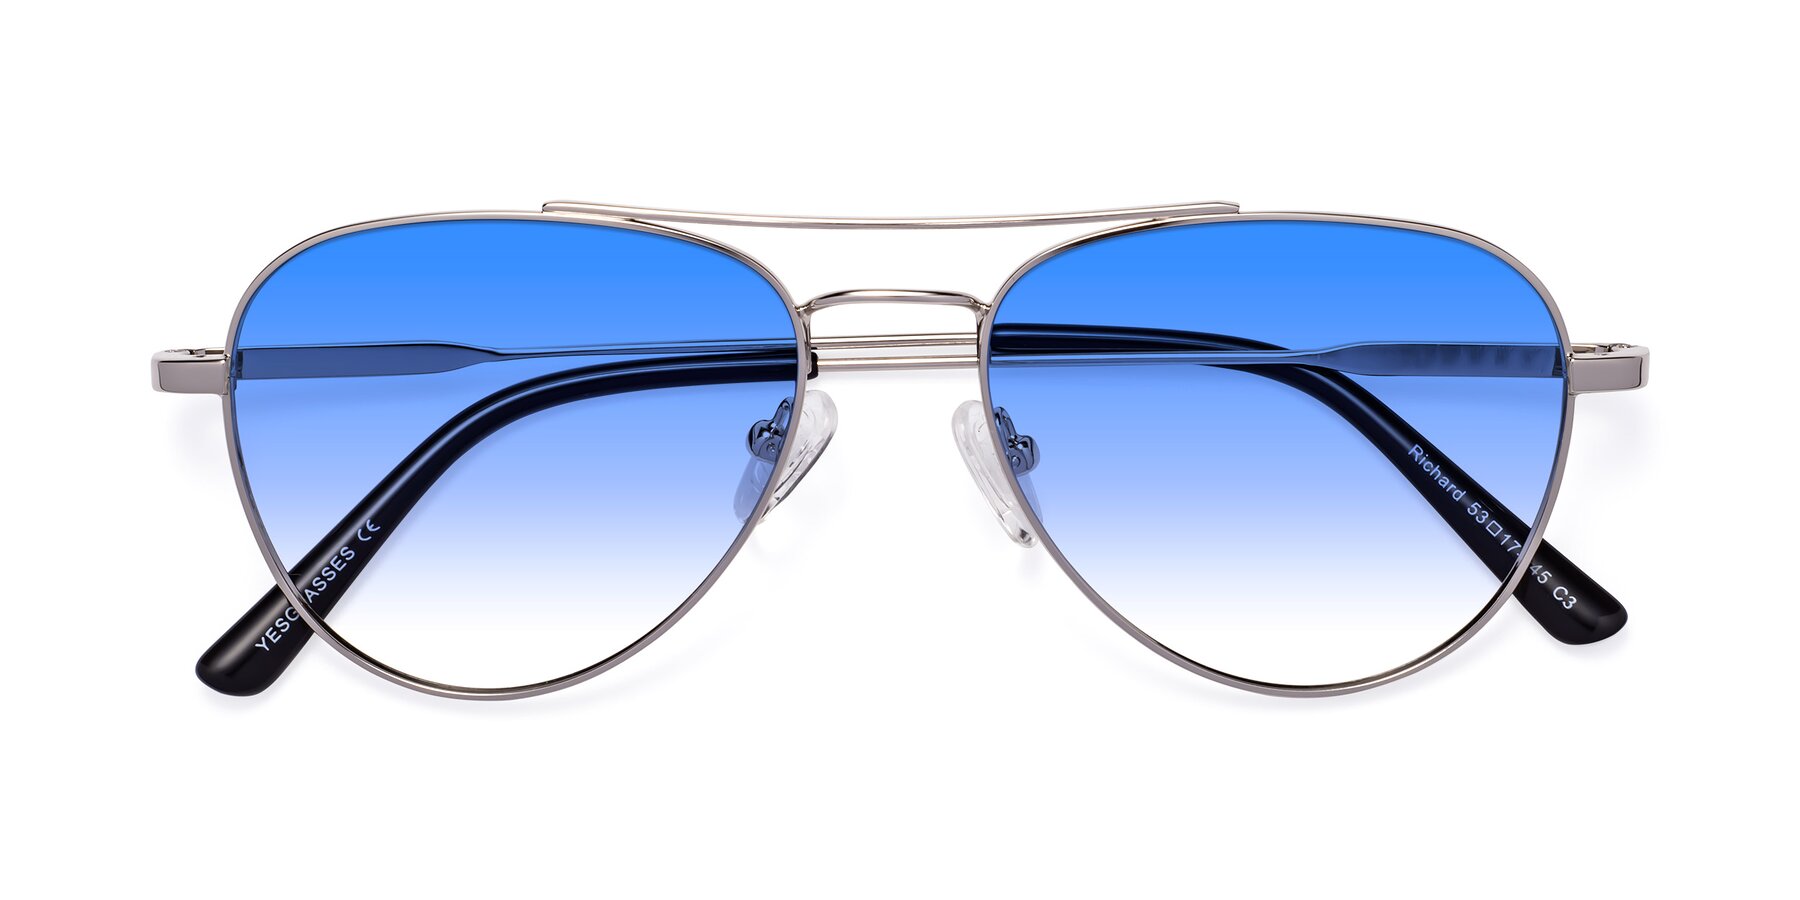 Silver Lightweight Metal Aviator Gradient Sunglasses with Blue Sunwear Lenses